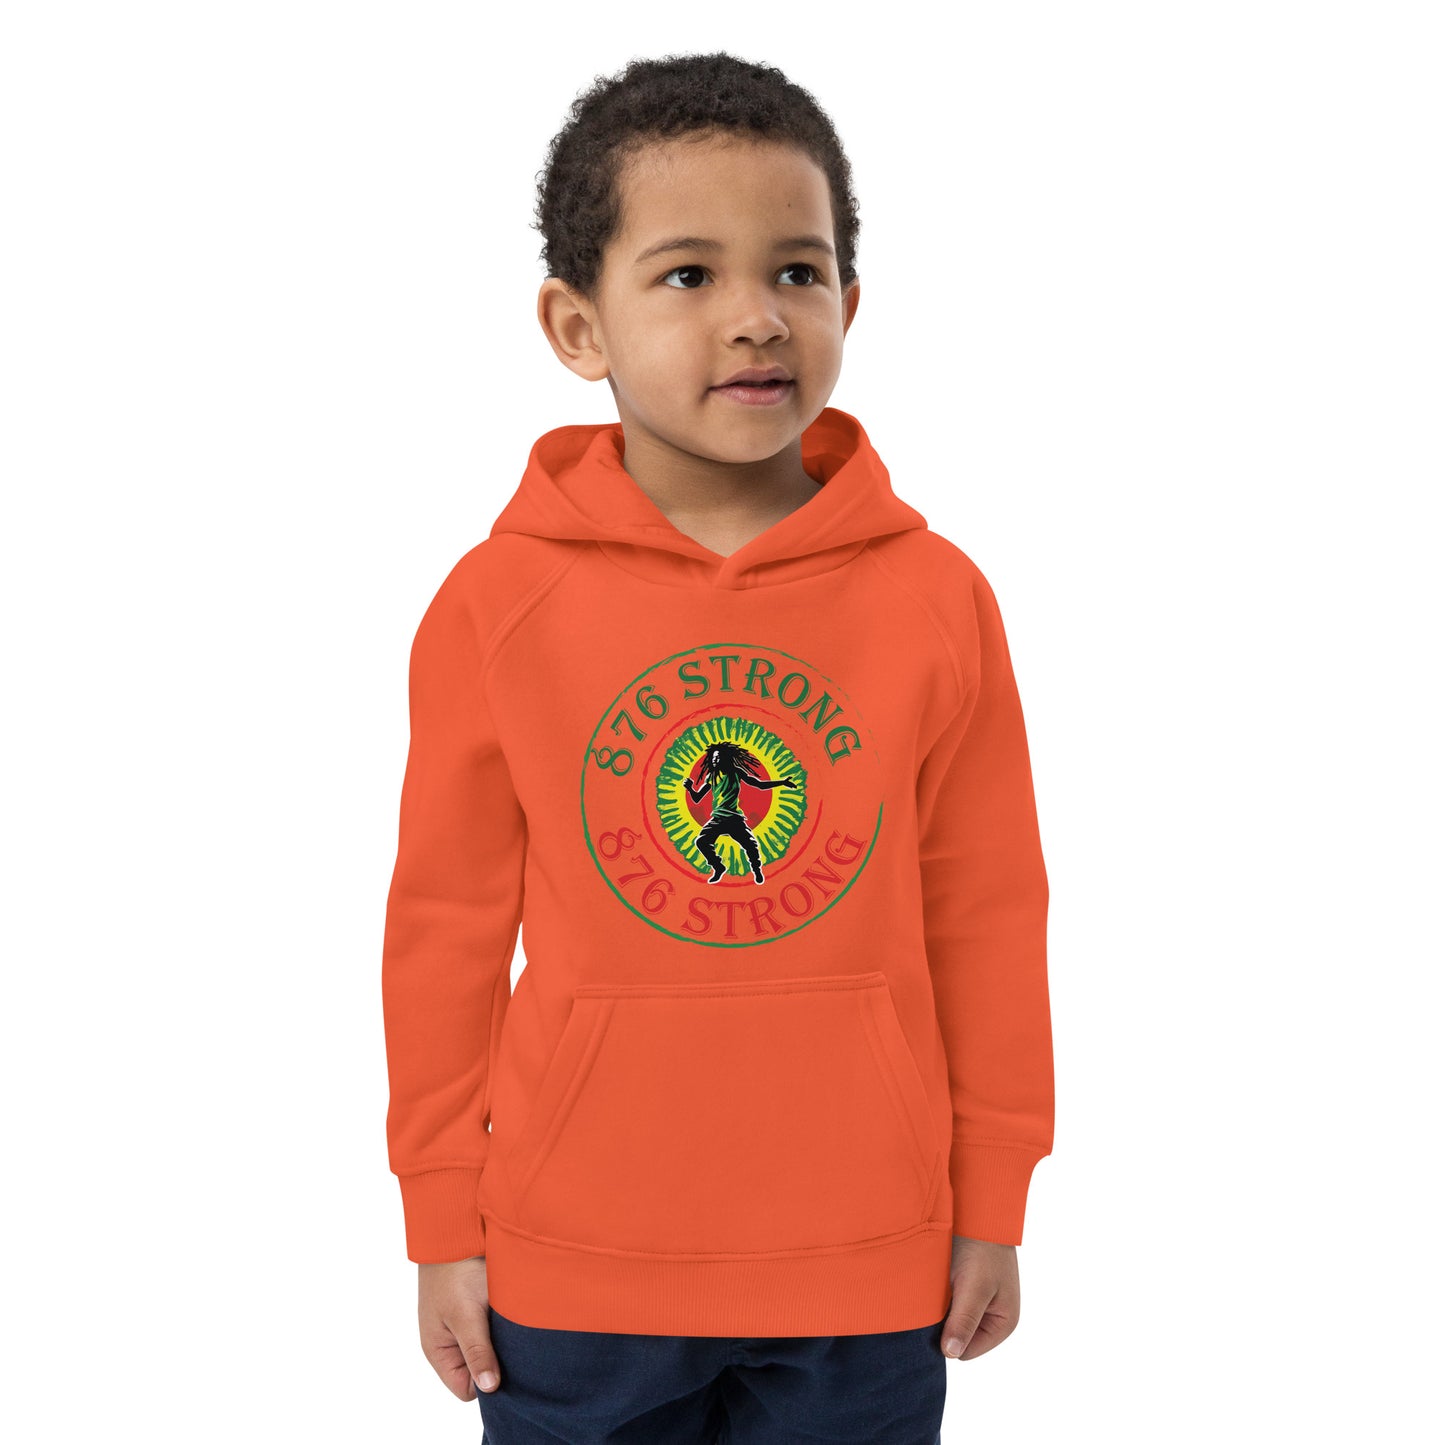 Kids eco "876 Strong" hoodie